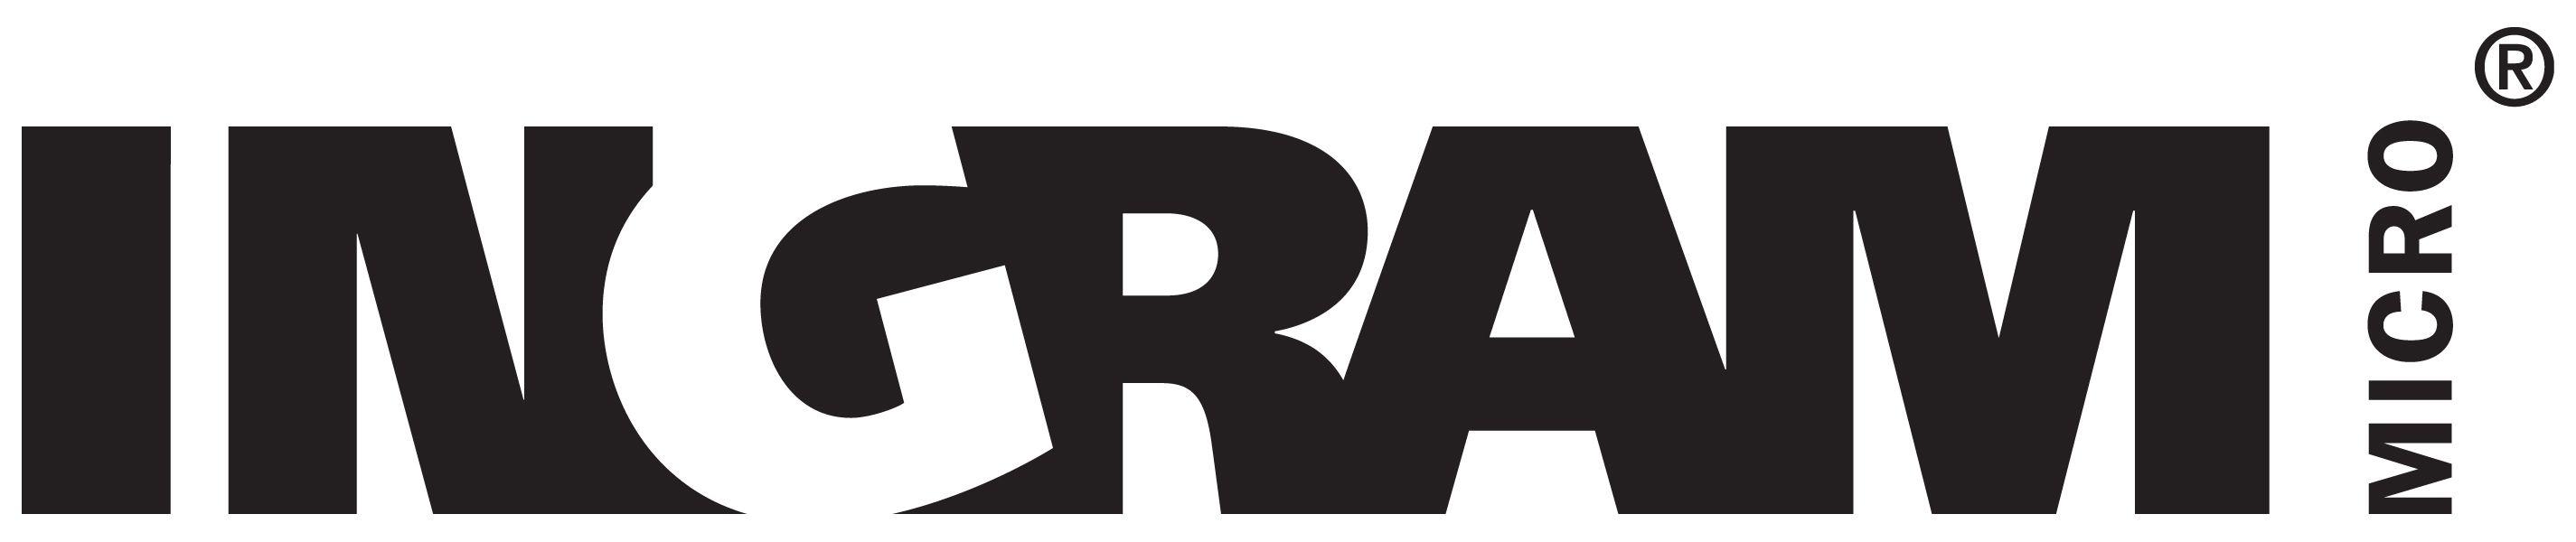 Ingram Logo - Corporate site - Image Gallery